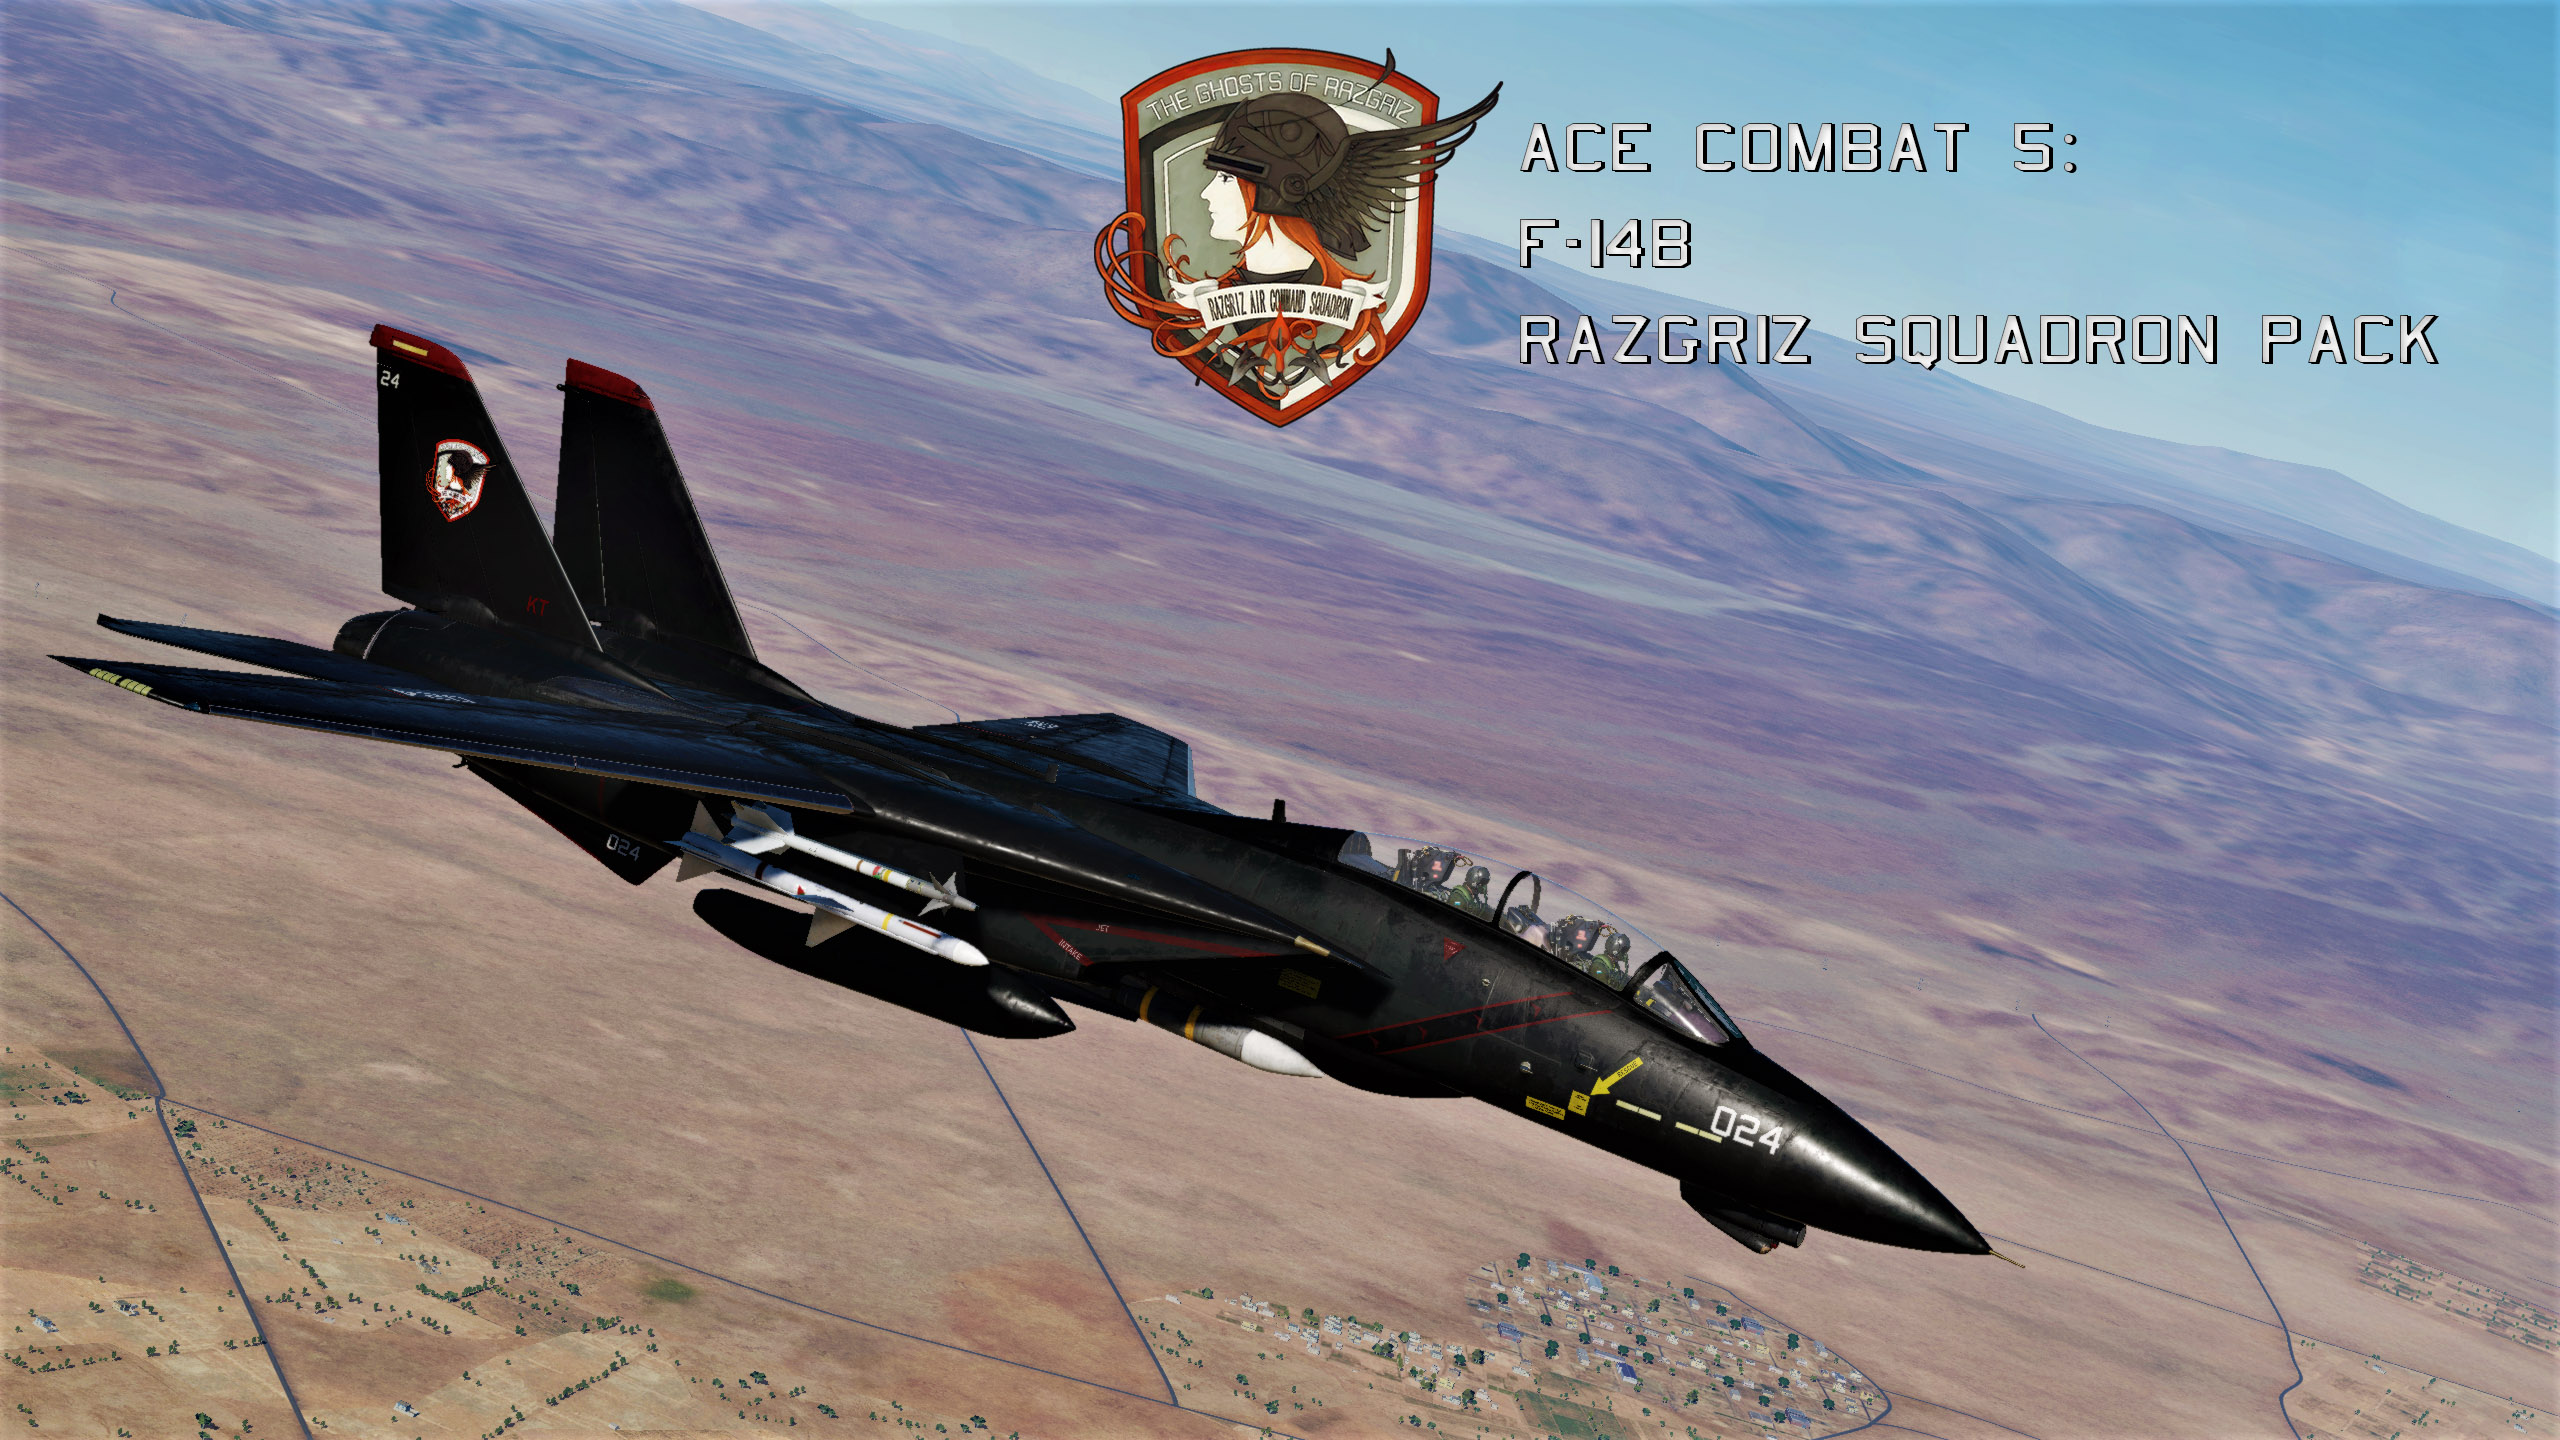 F-14B - Ace Combat 5: Razgriz Squadron